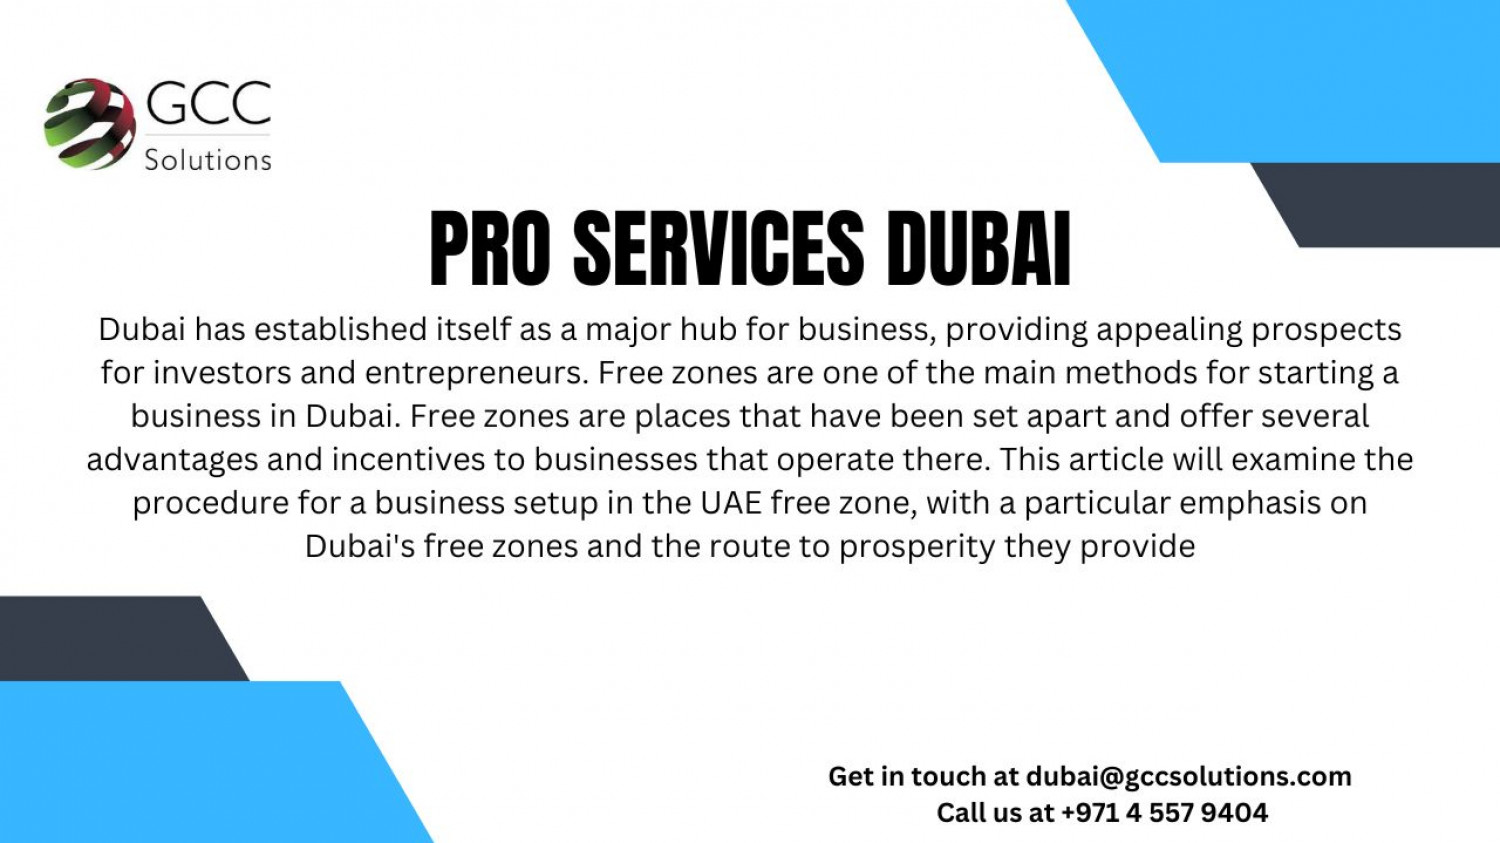 Pro Services Dubai Infographic